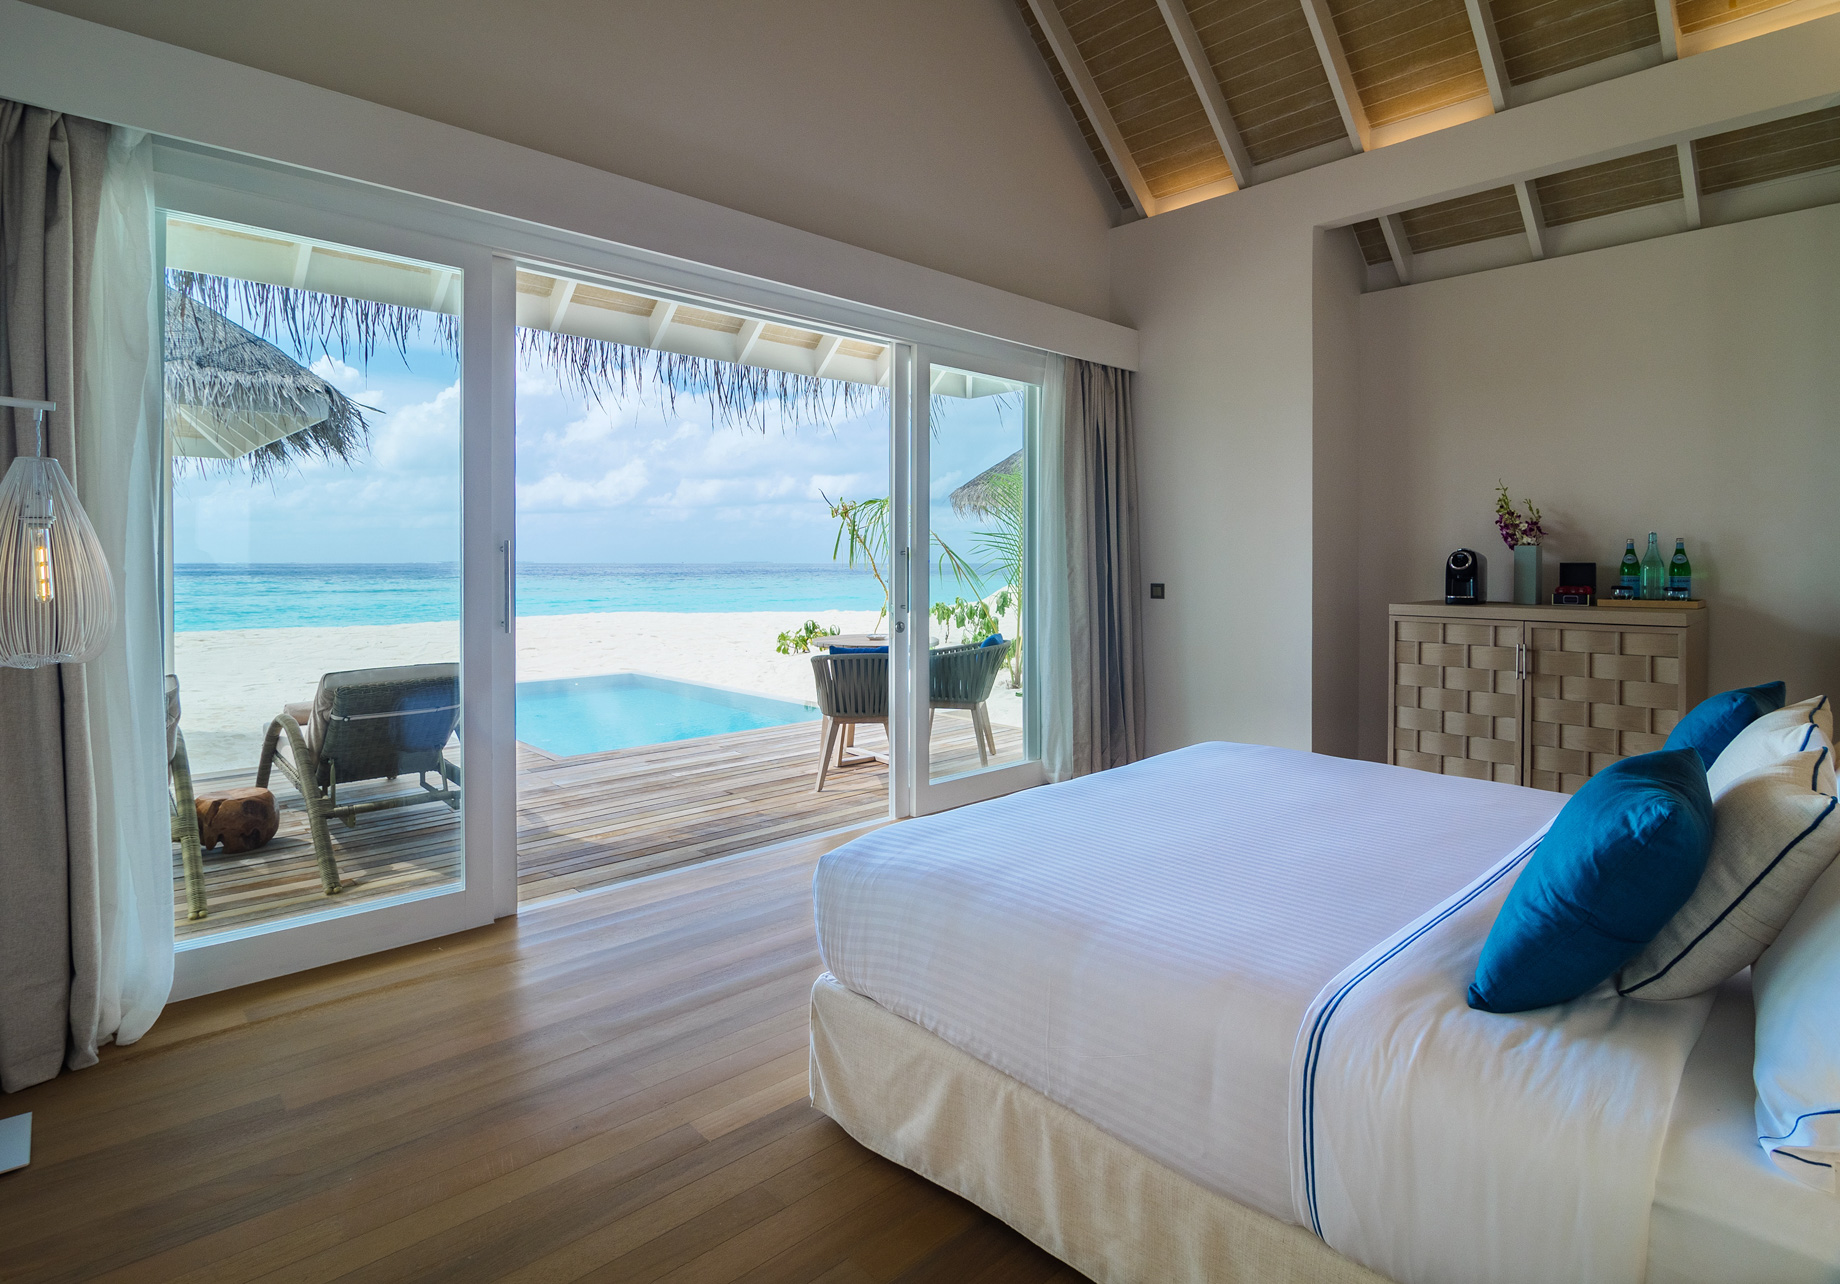 Baglioni Resort Maldives - Maagau Island, Rinbudhoo, Maldives - Beach Villa Bedroom